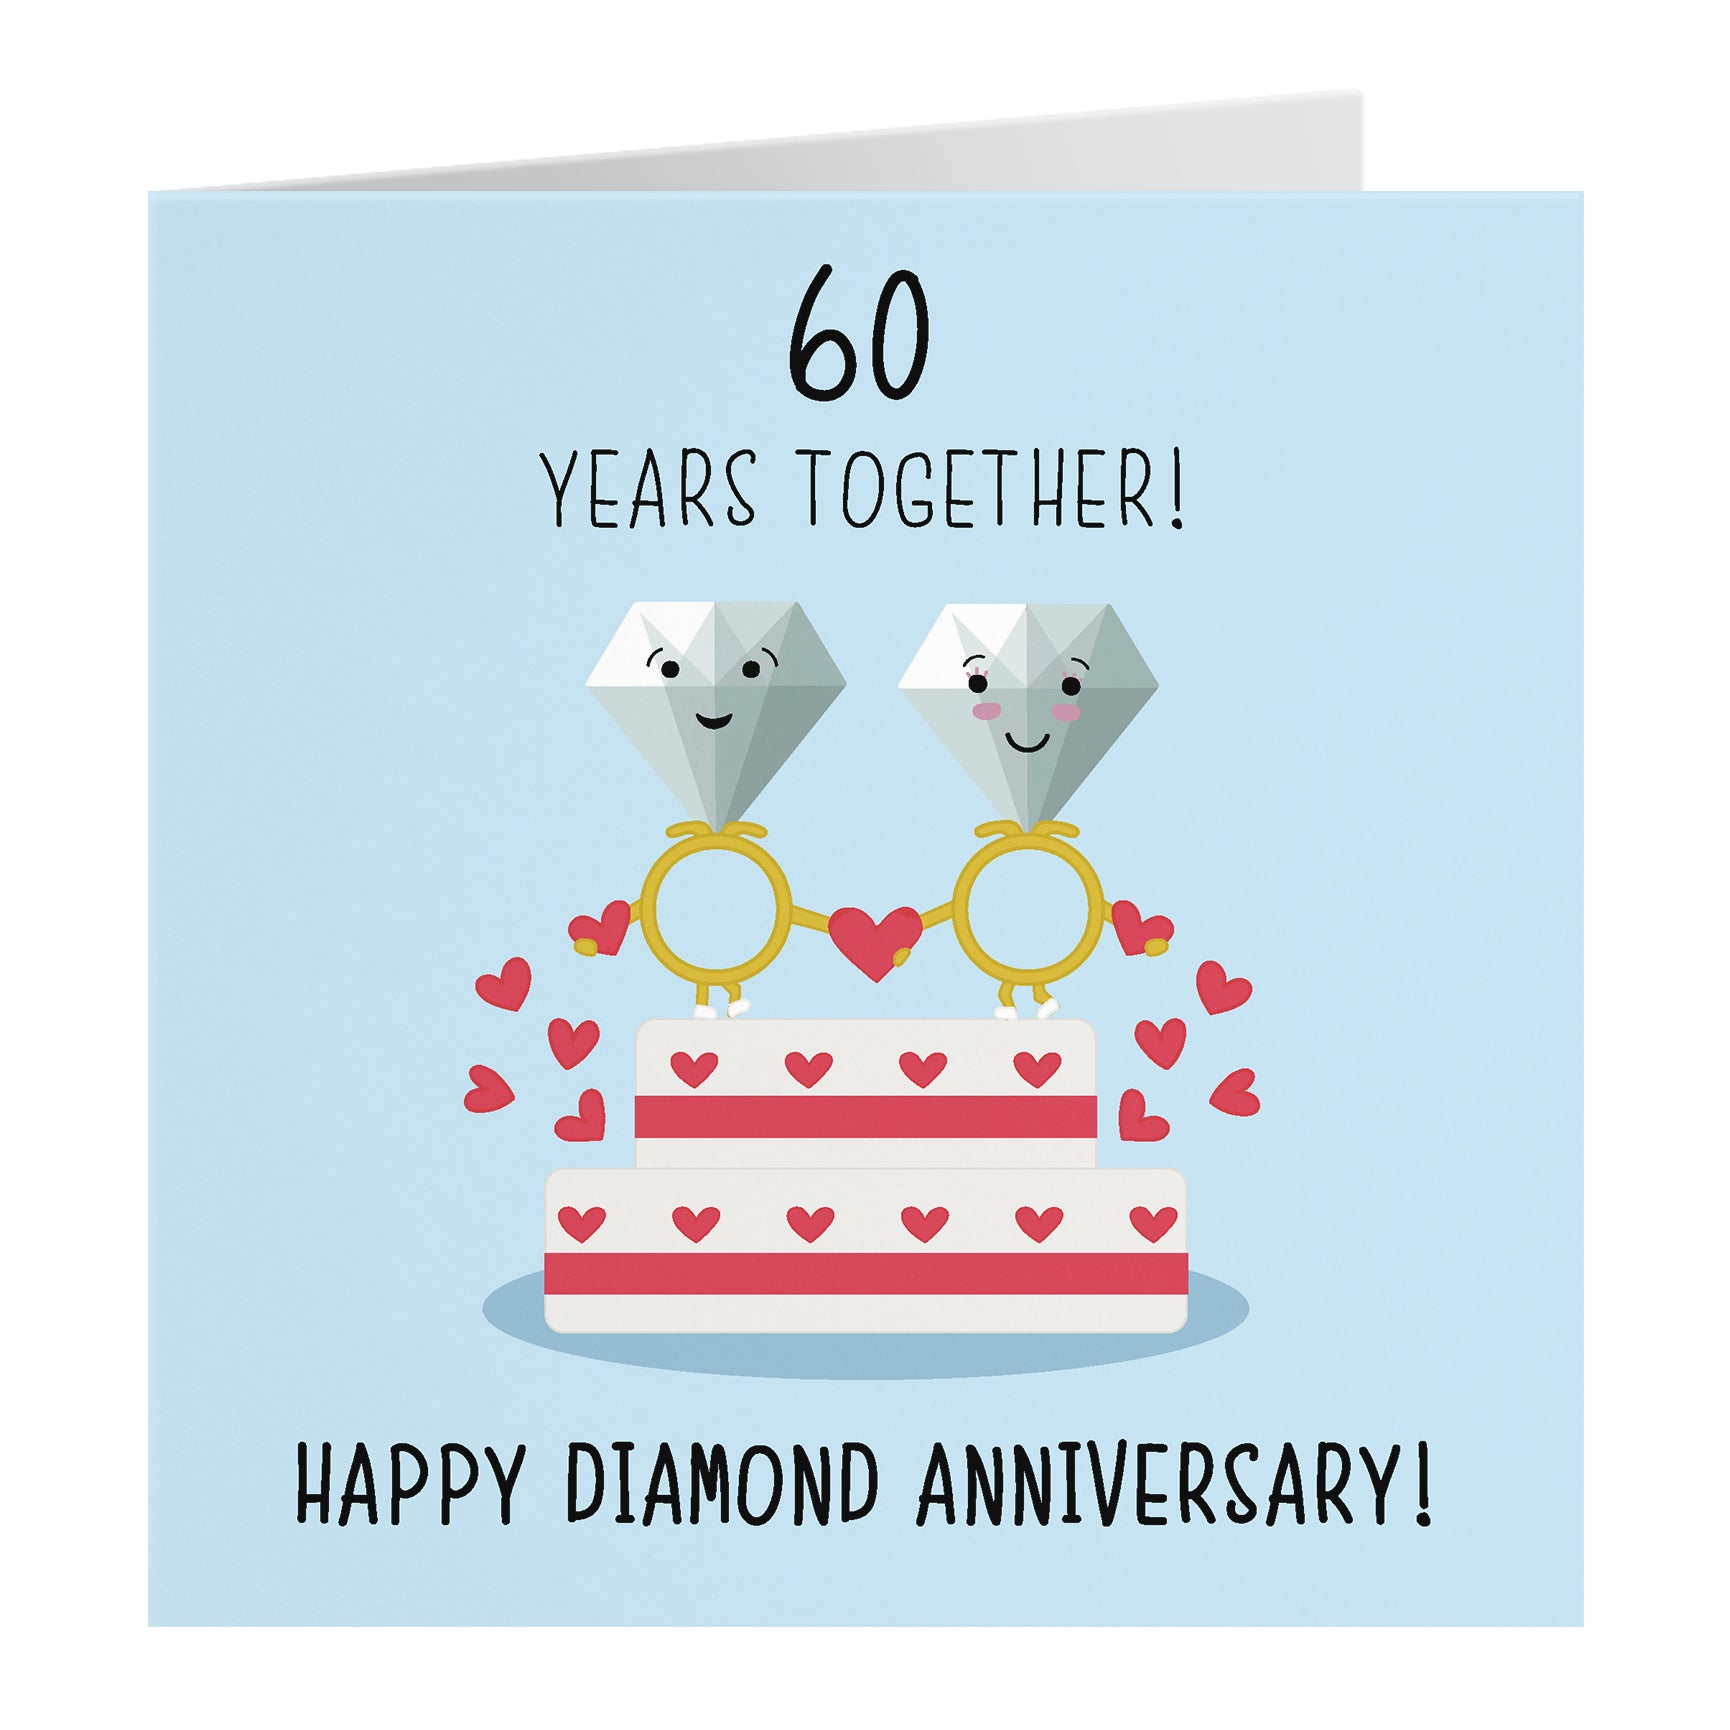 60th Anniversary Cards - Diamond Anniversary